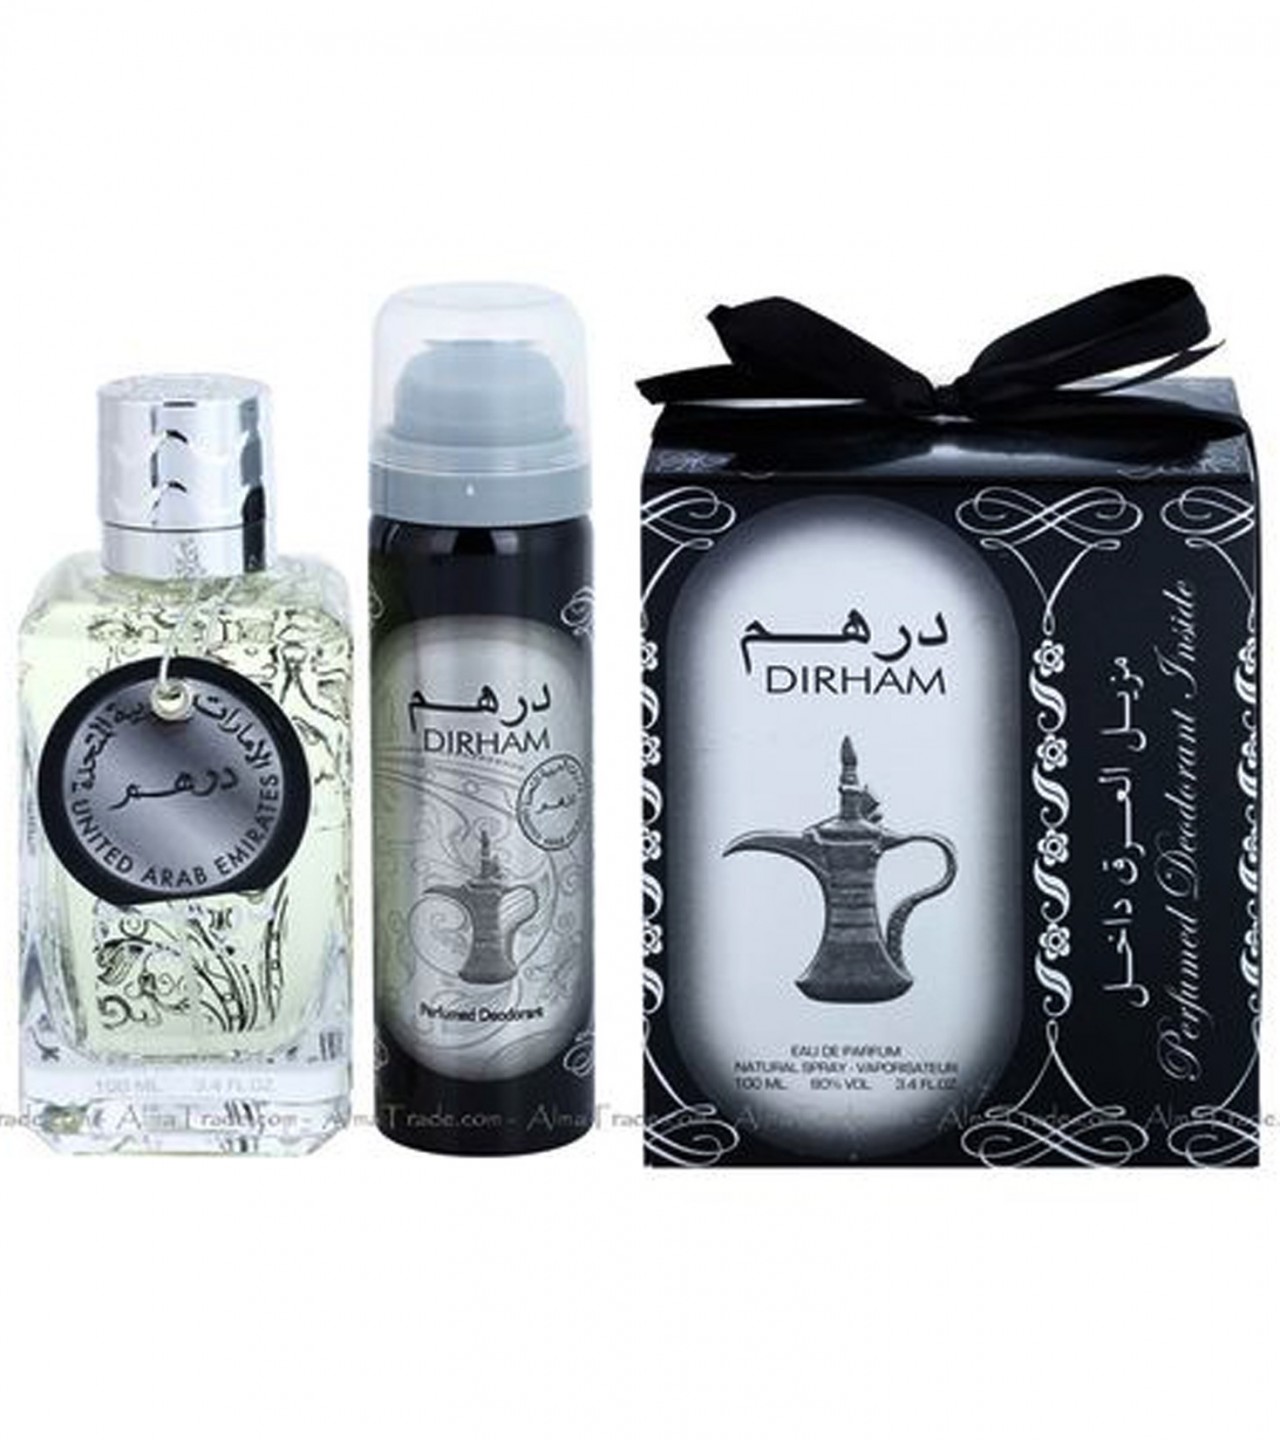 Ard AL Zaafaran Dirham Perfume with Deodorant For Unisex – EDP – 100 ml & 50 ml